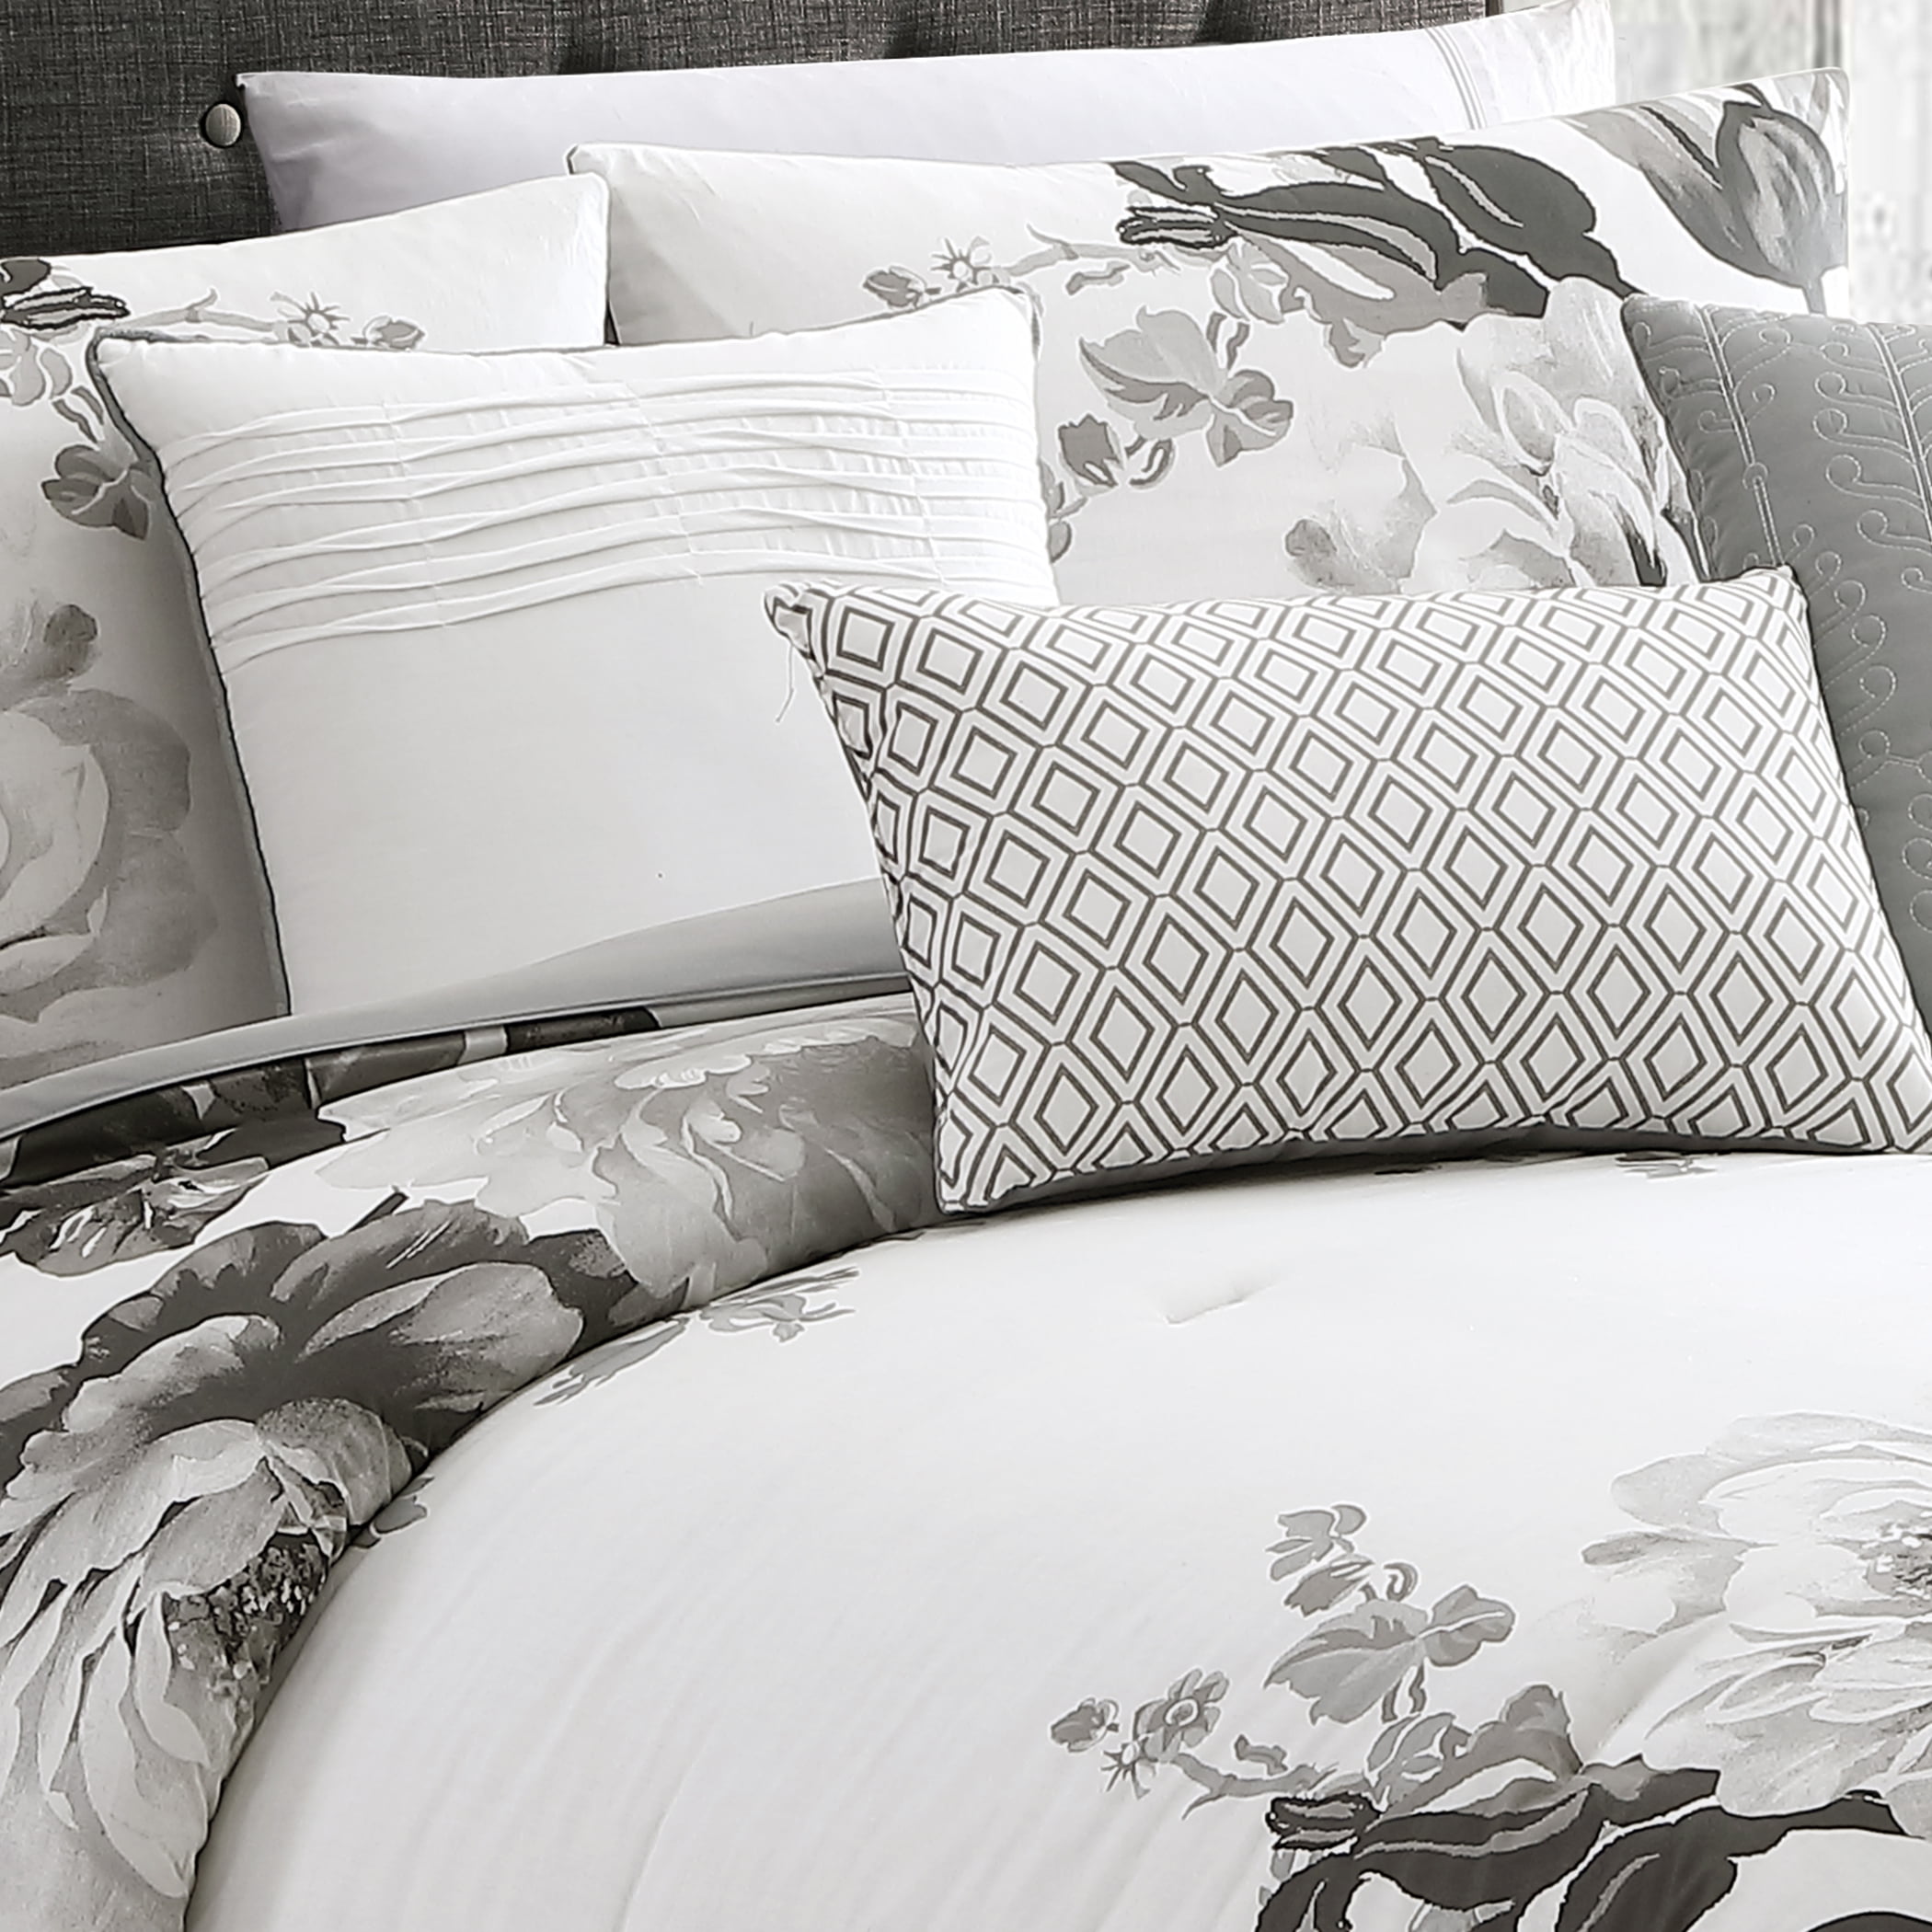 Set of 7 Black/Gray Details about   Riverbrook Home Ridgely Comforter Set King 